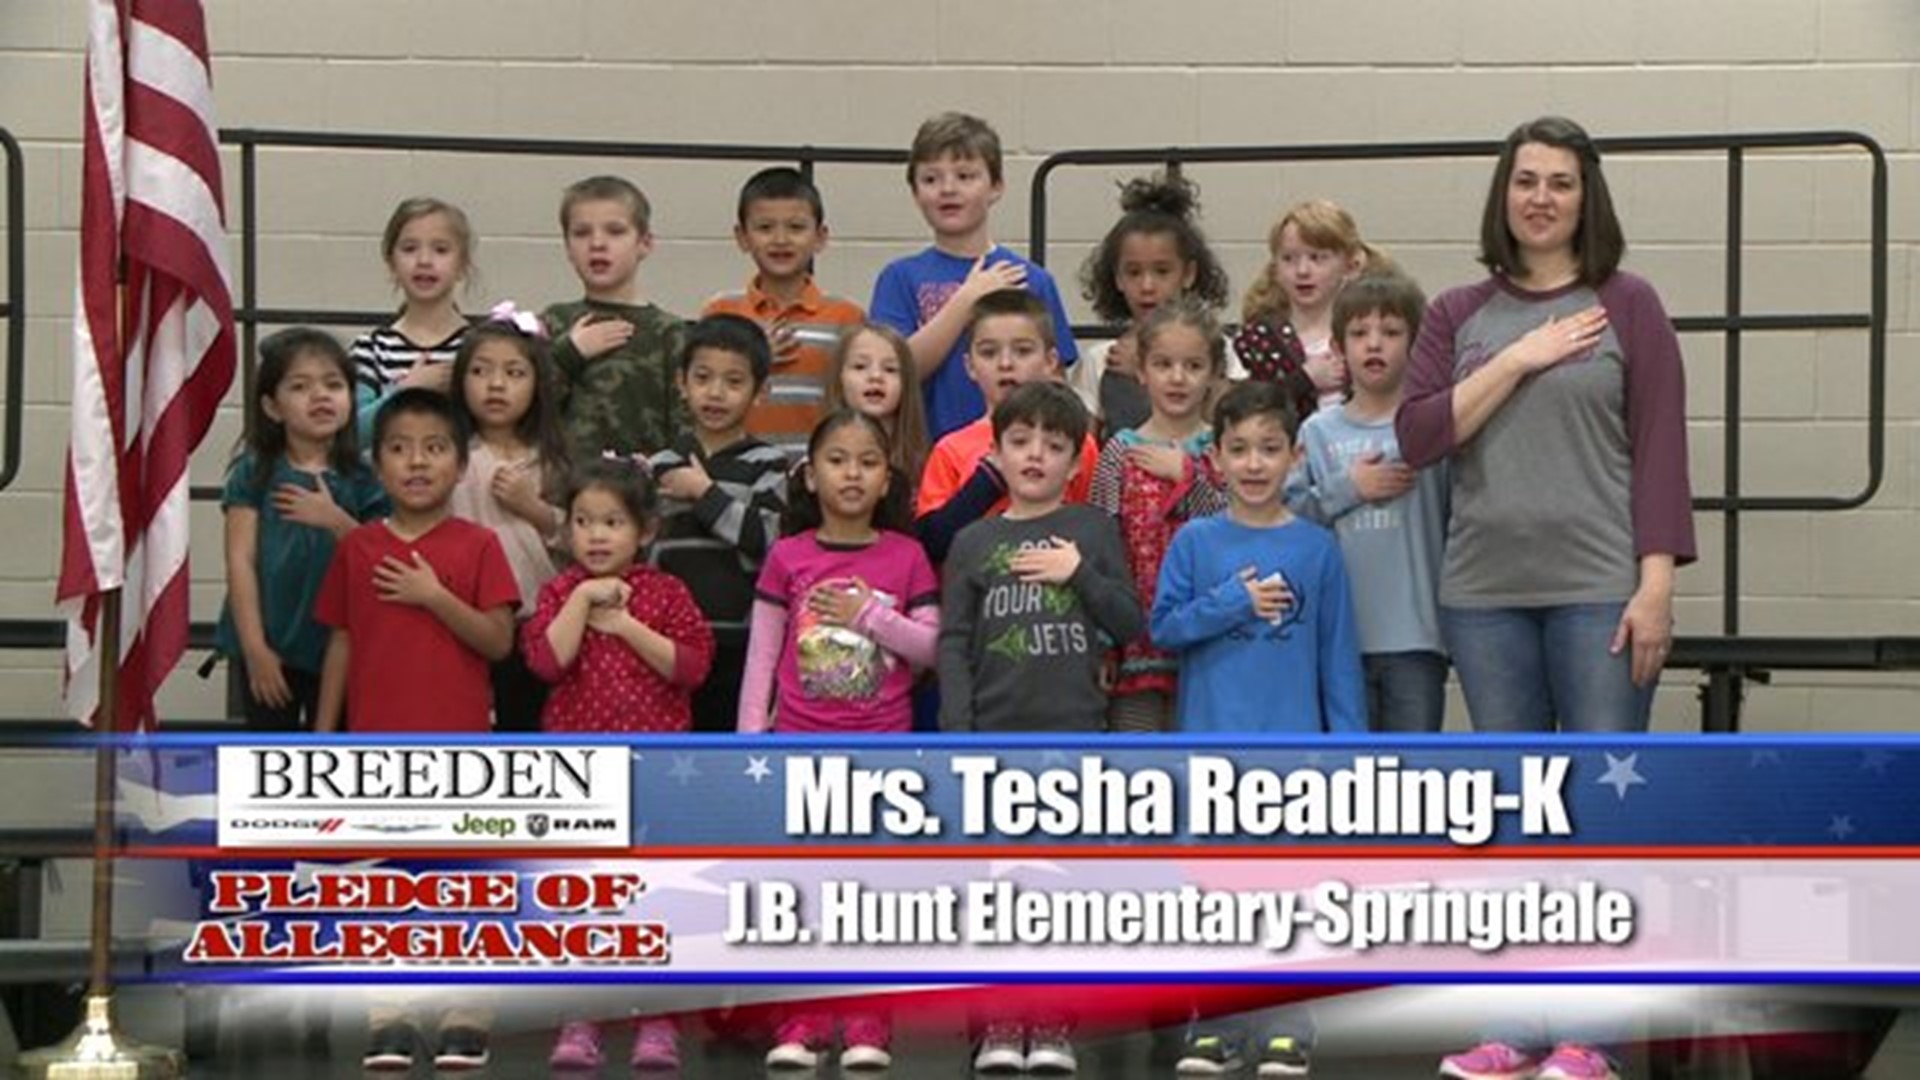 J.B. Hunt Elementary, Springdale - Mrs. Tesha Reading - Kindergarten